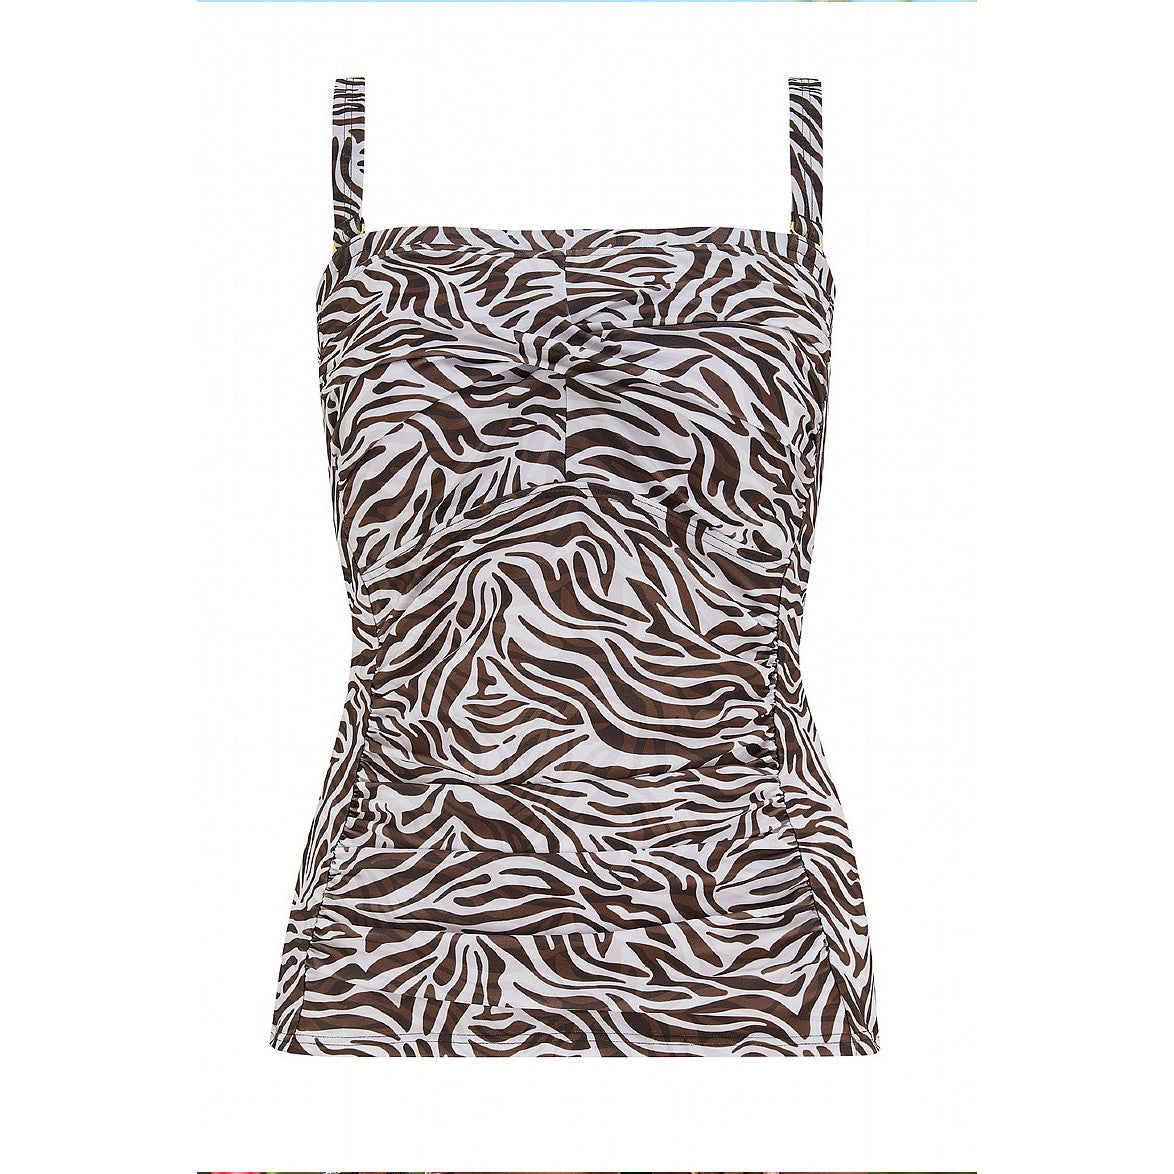 Tanzania Tankini in a bold zebra print with black bikini briefs | Swimwear from Nicola Jane | Pocketed mastectomy swimwear for women touched by breast cancer